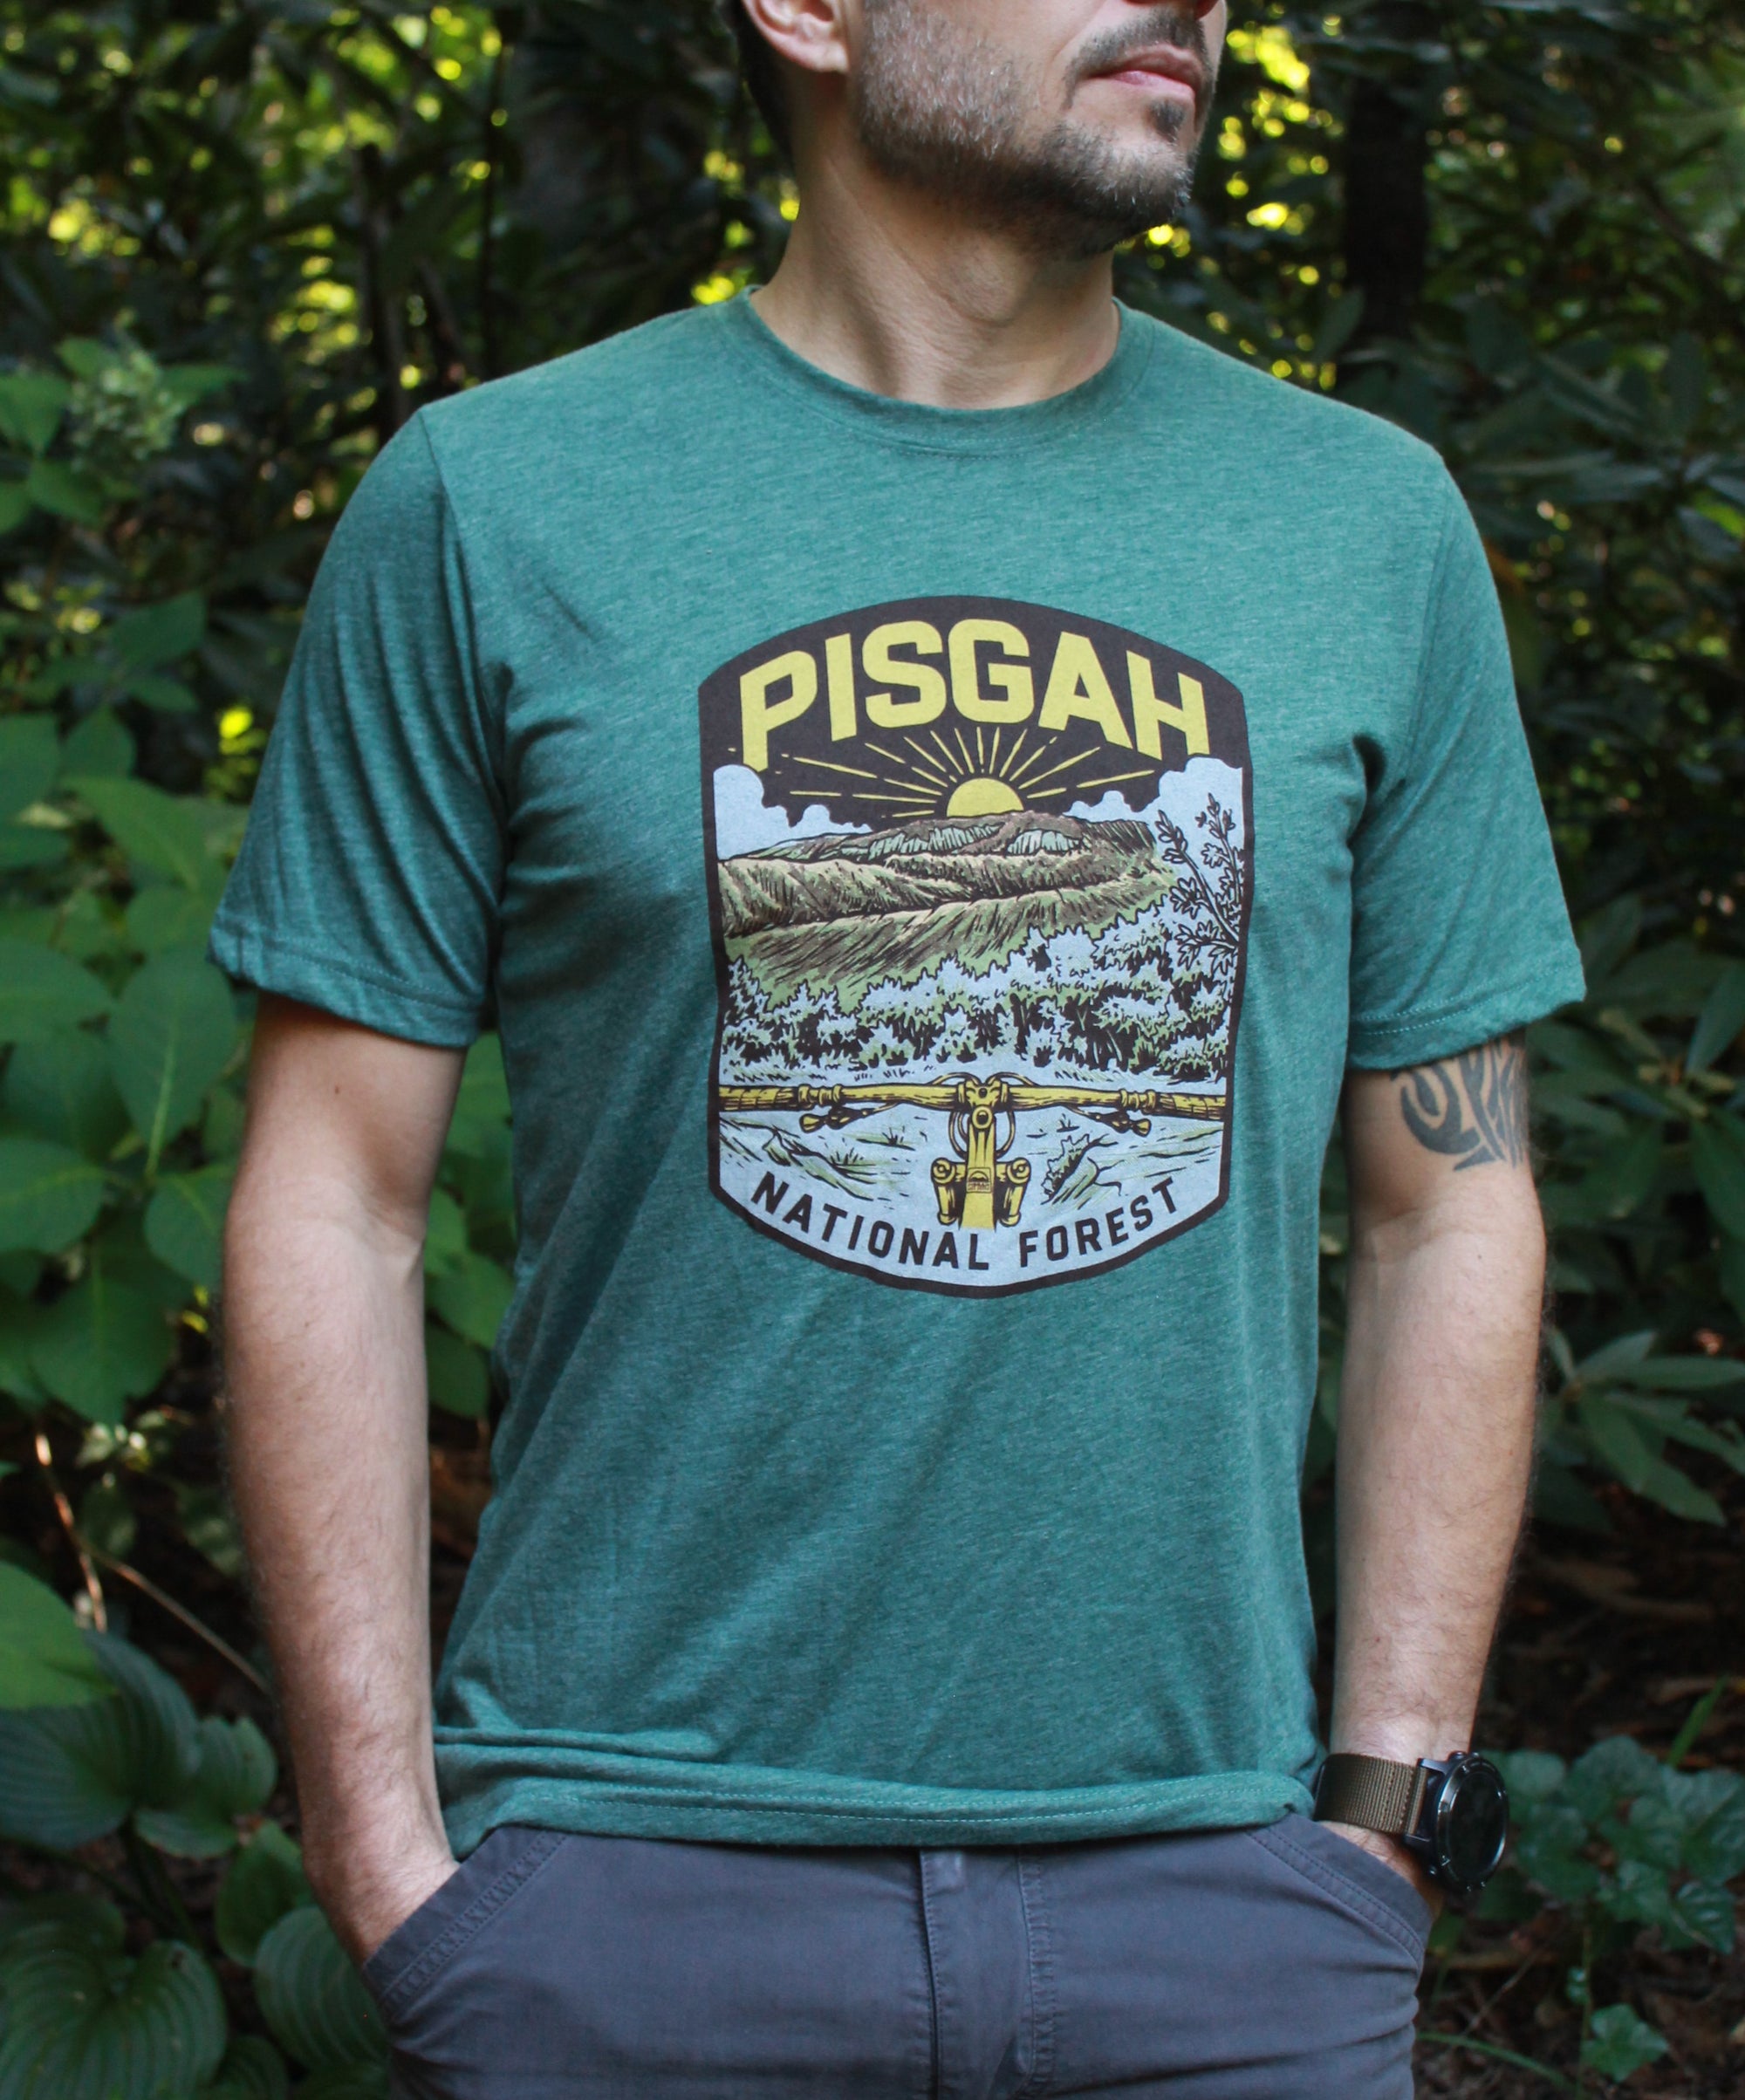 Pisgah Looking Glass - Men's Shirt (Pine)